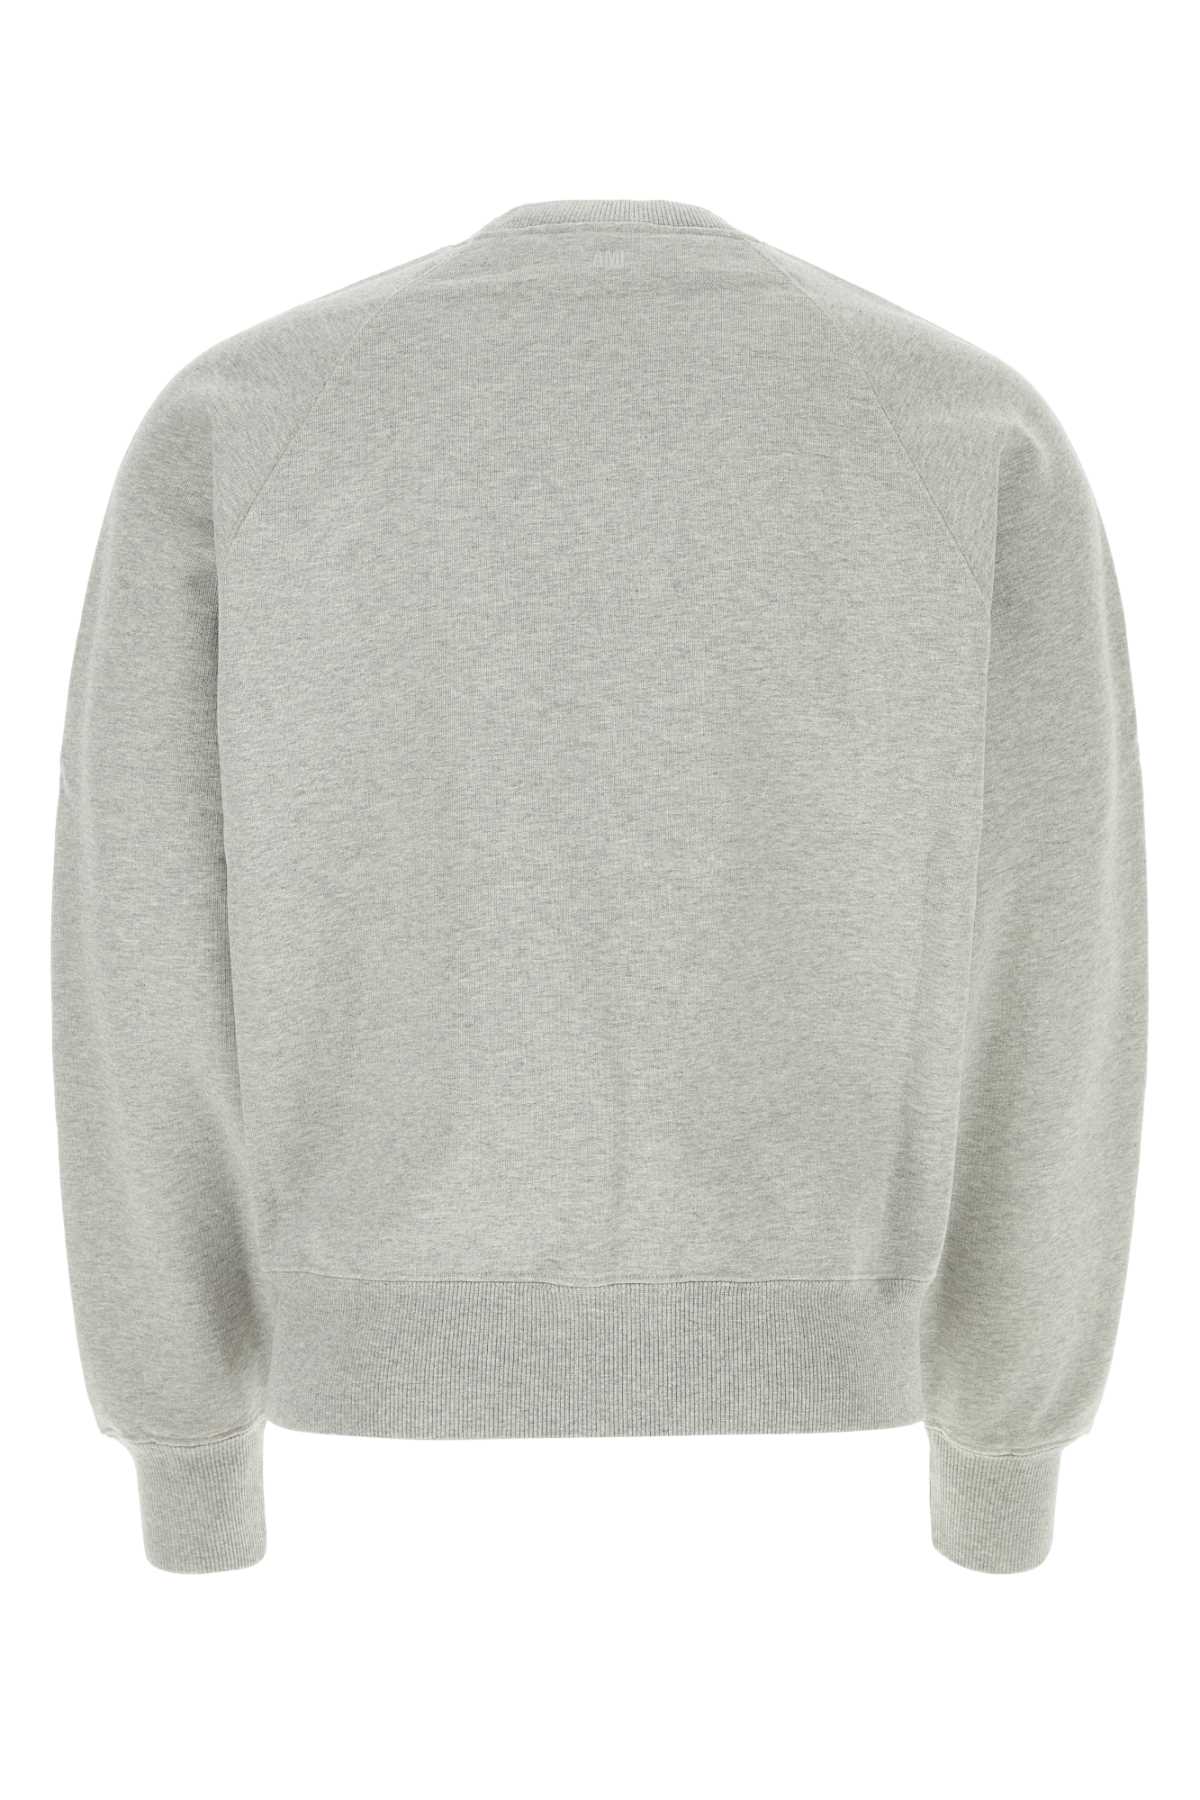 Shop Ami Alexandre Mattiussi Light Grey Cotton Sweatshirt In Heatherashgrey